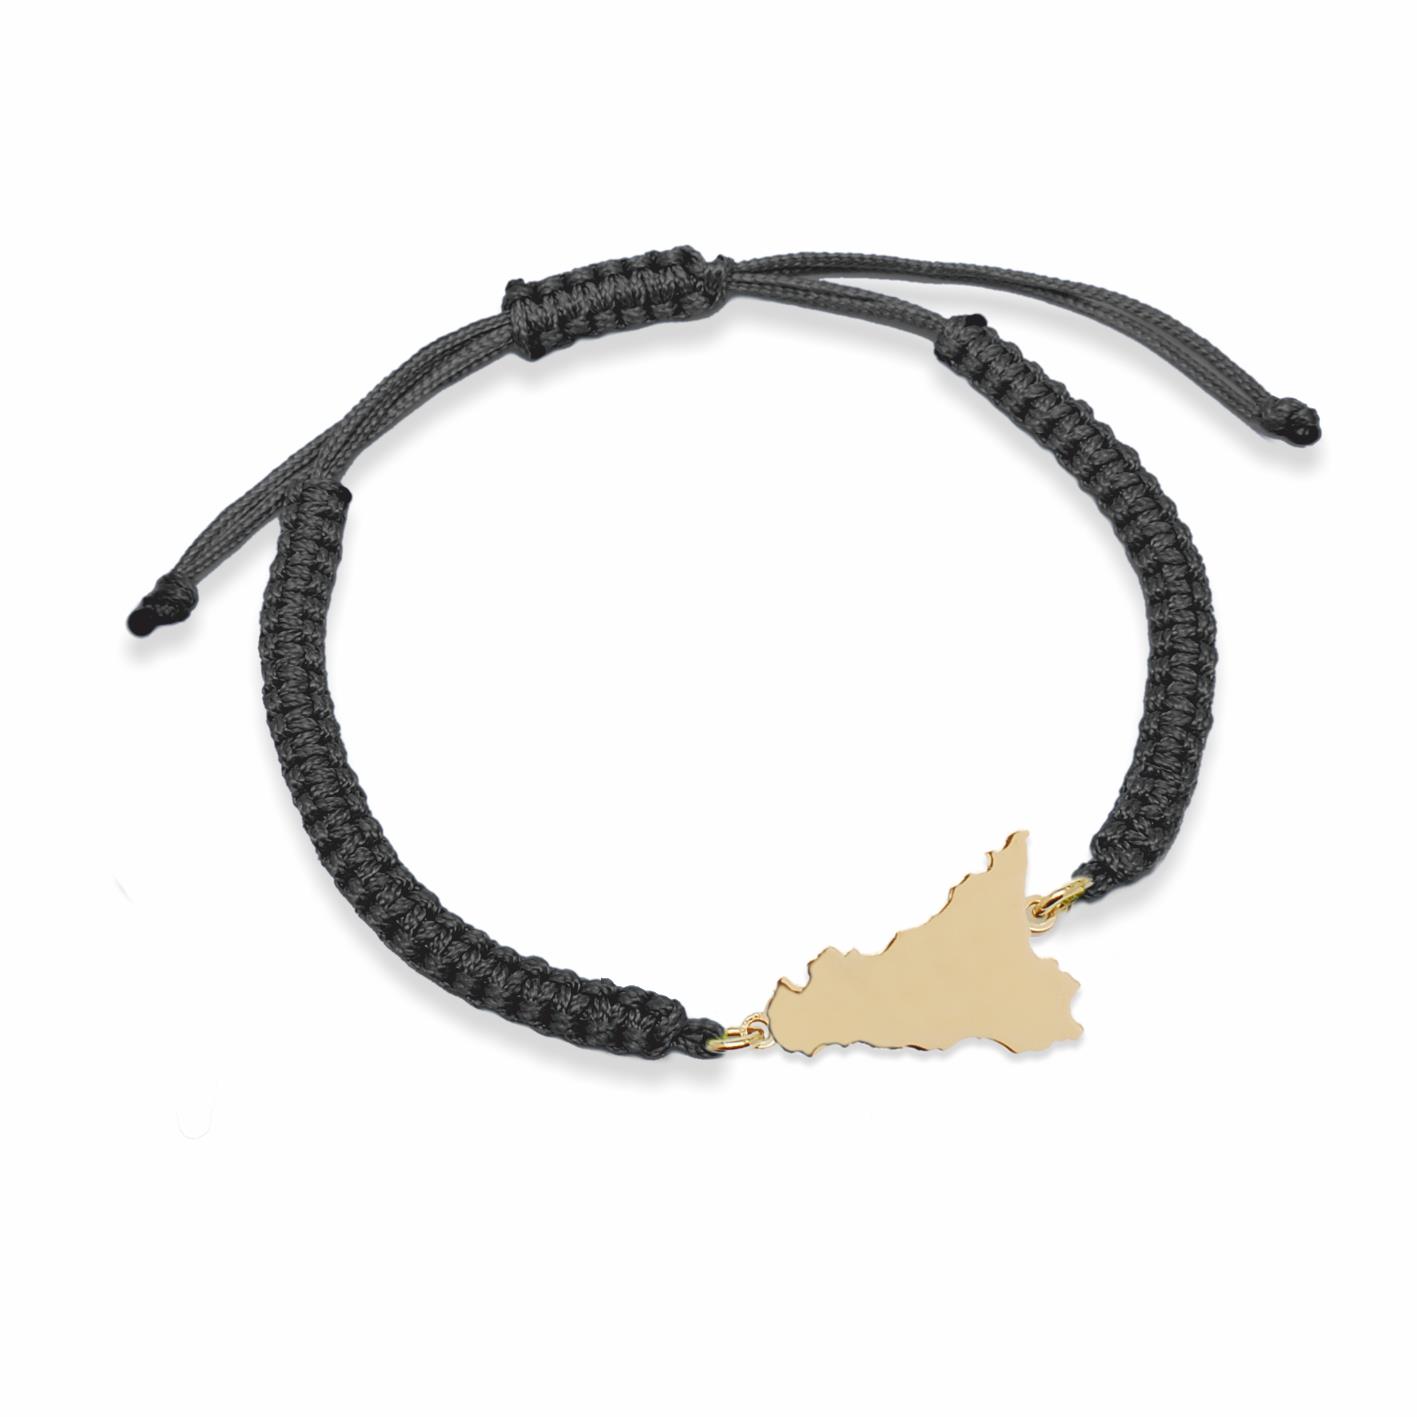 Black nylon bracelet with Sicily symbol in golden silver - MY SICILY